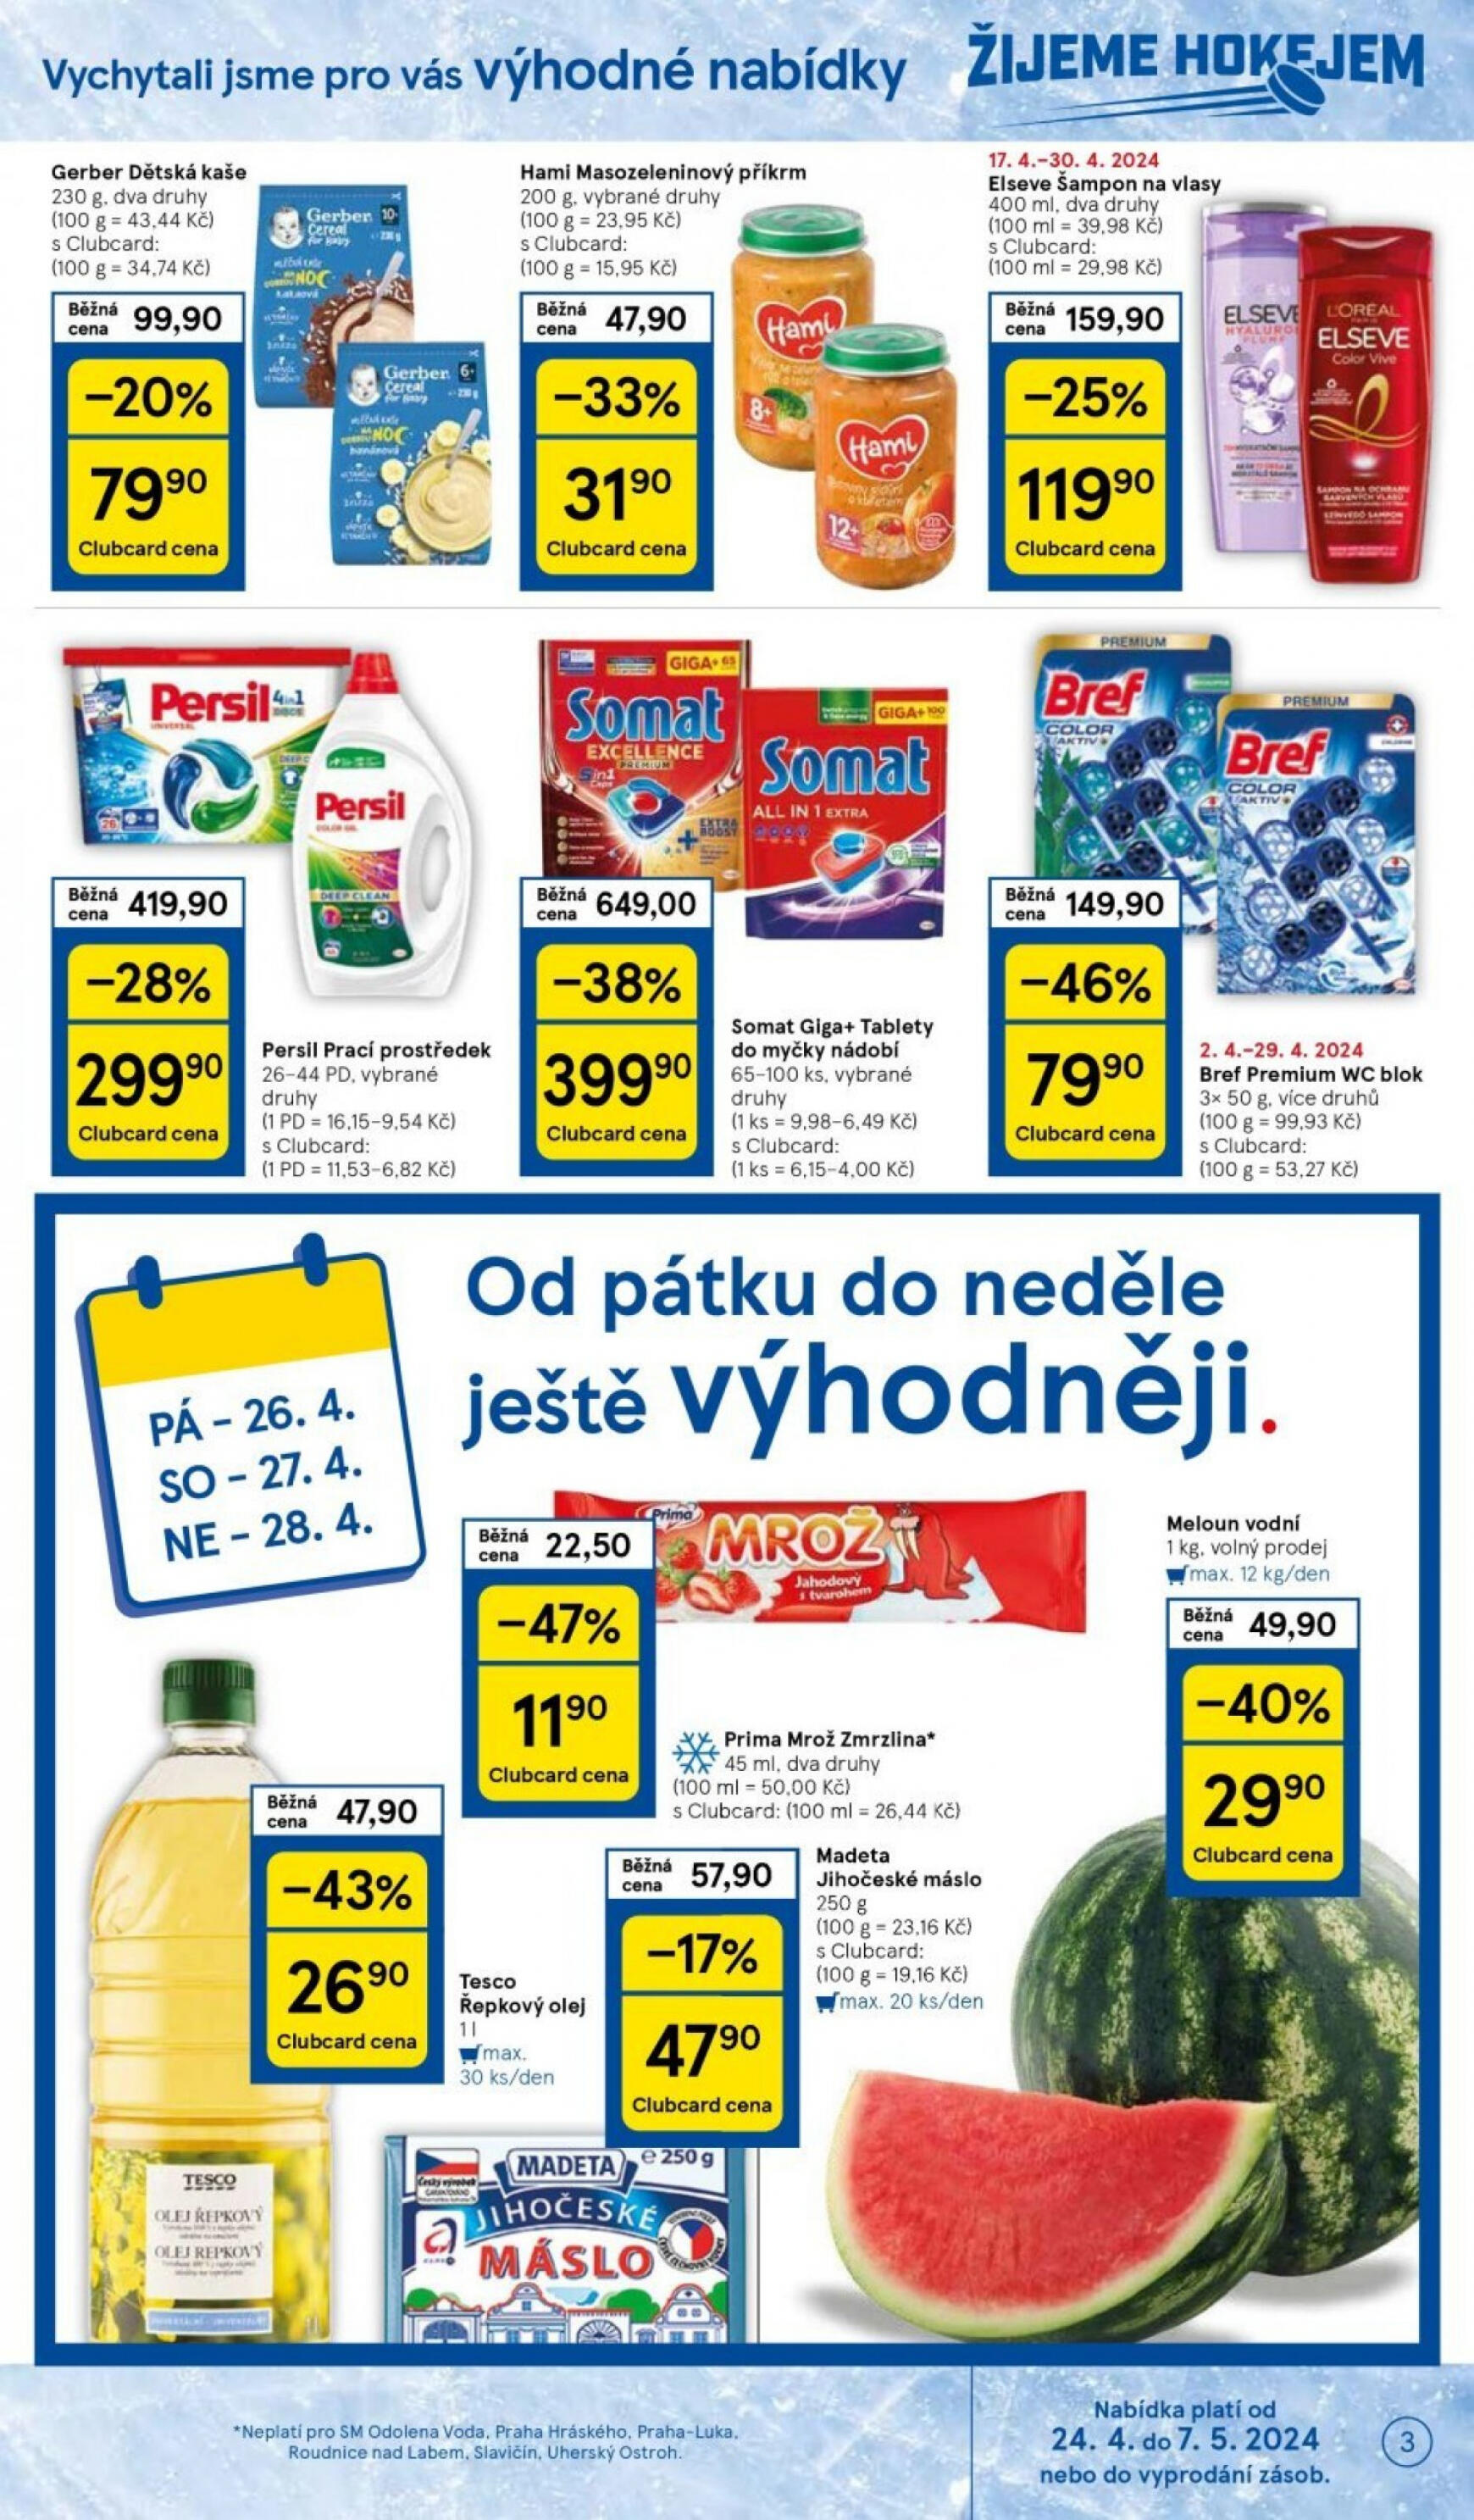 tesco - Leták Tesco supermarket aktuální 24.04. - 30.04. - page: 3